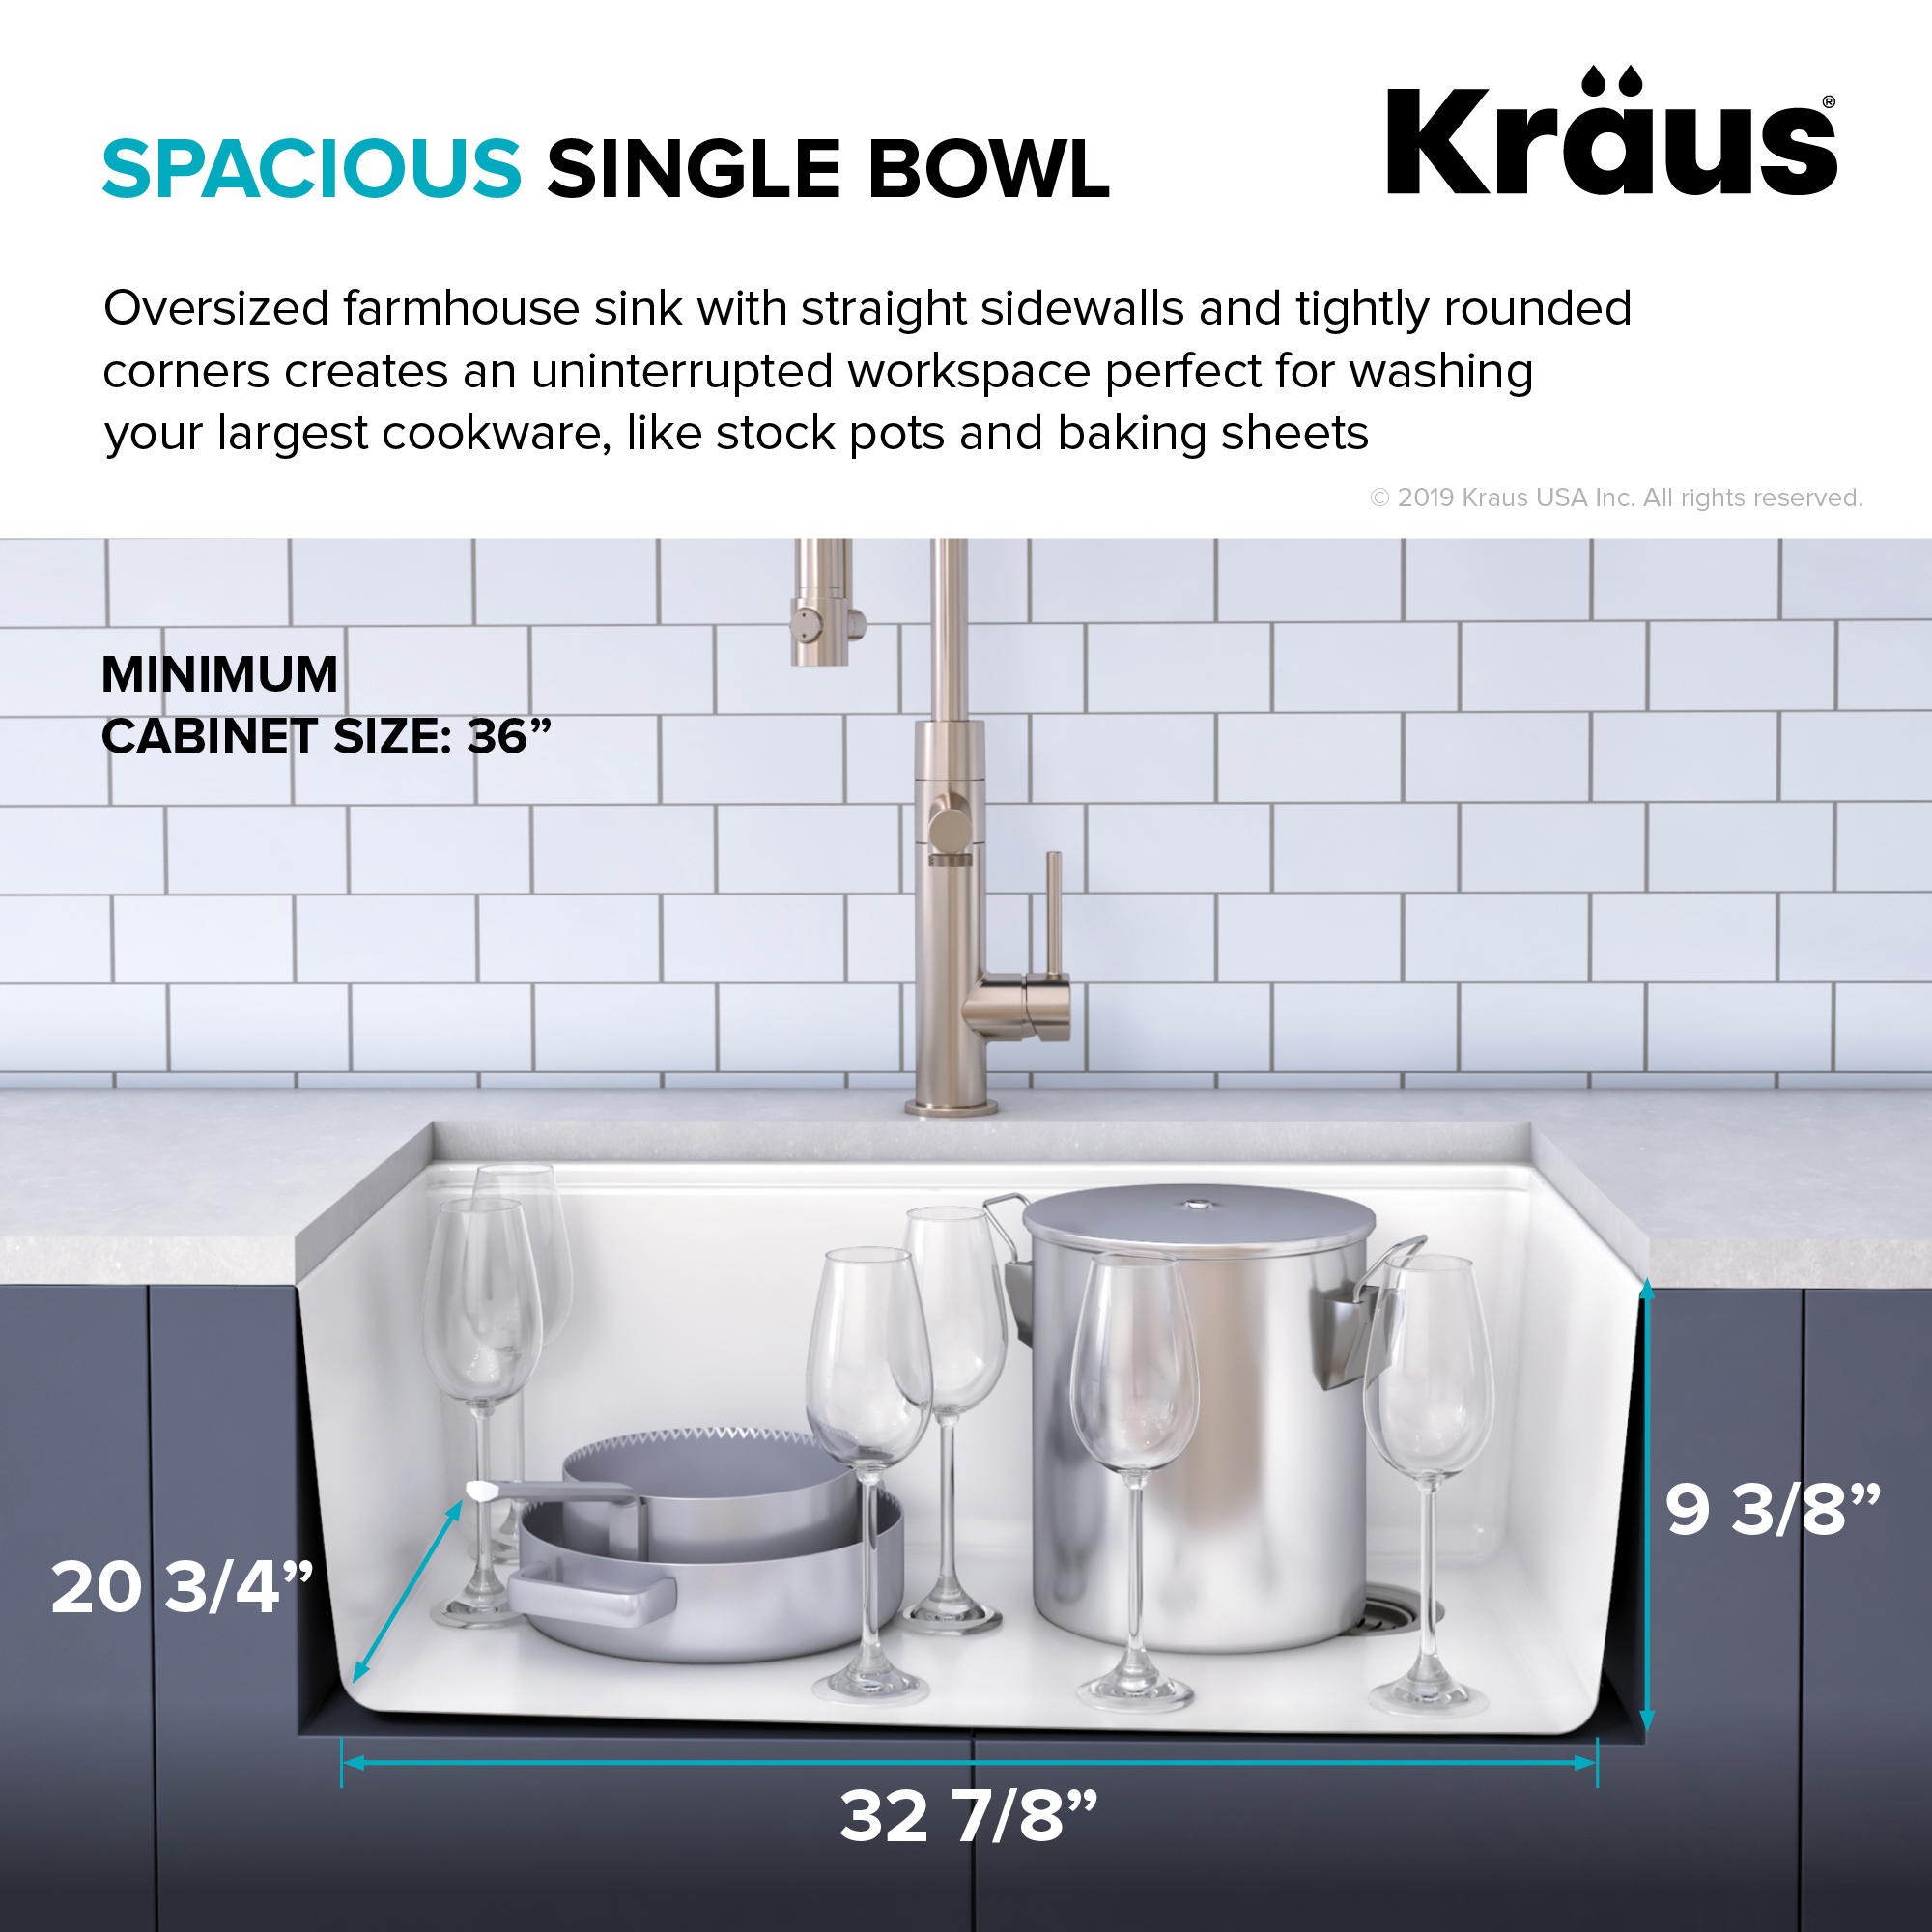 KRAUS Bellucci 33-inch Granite Quartz Composite Farmhouse Flat Apron Front  Single Bowl Kitchen Sink with CeramTek in Black